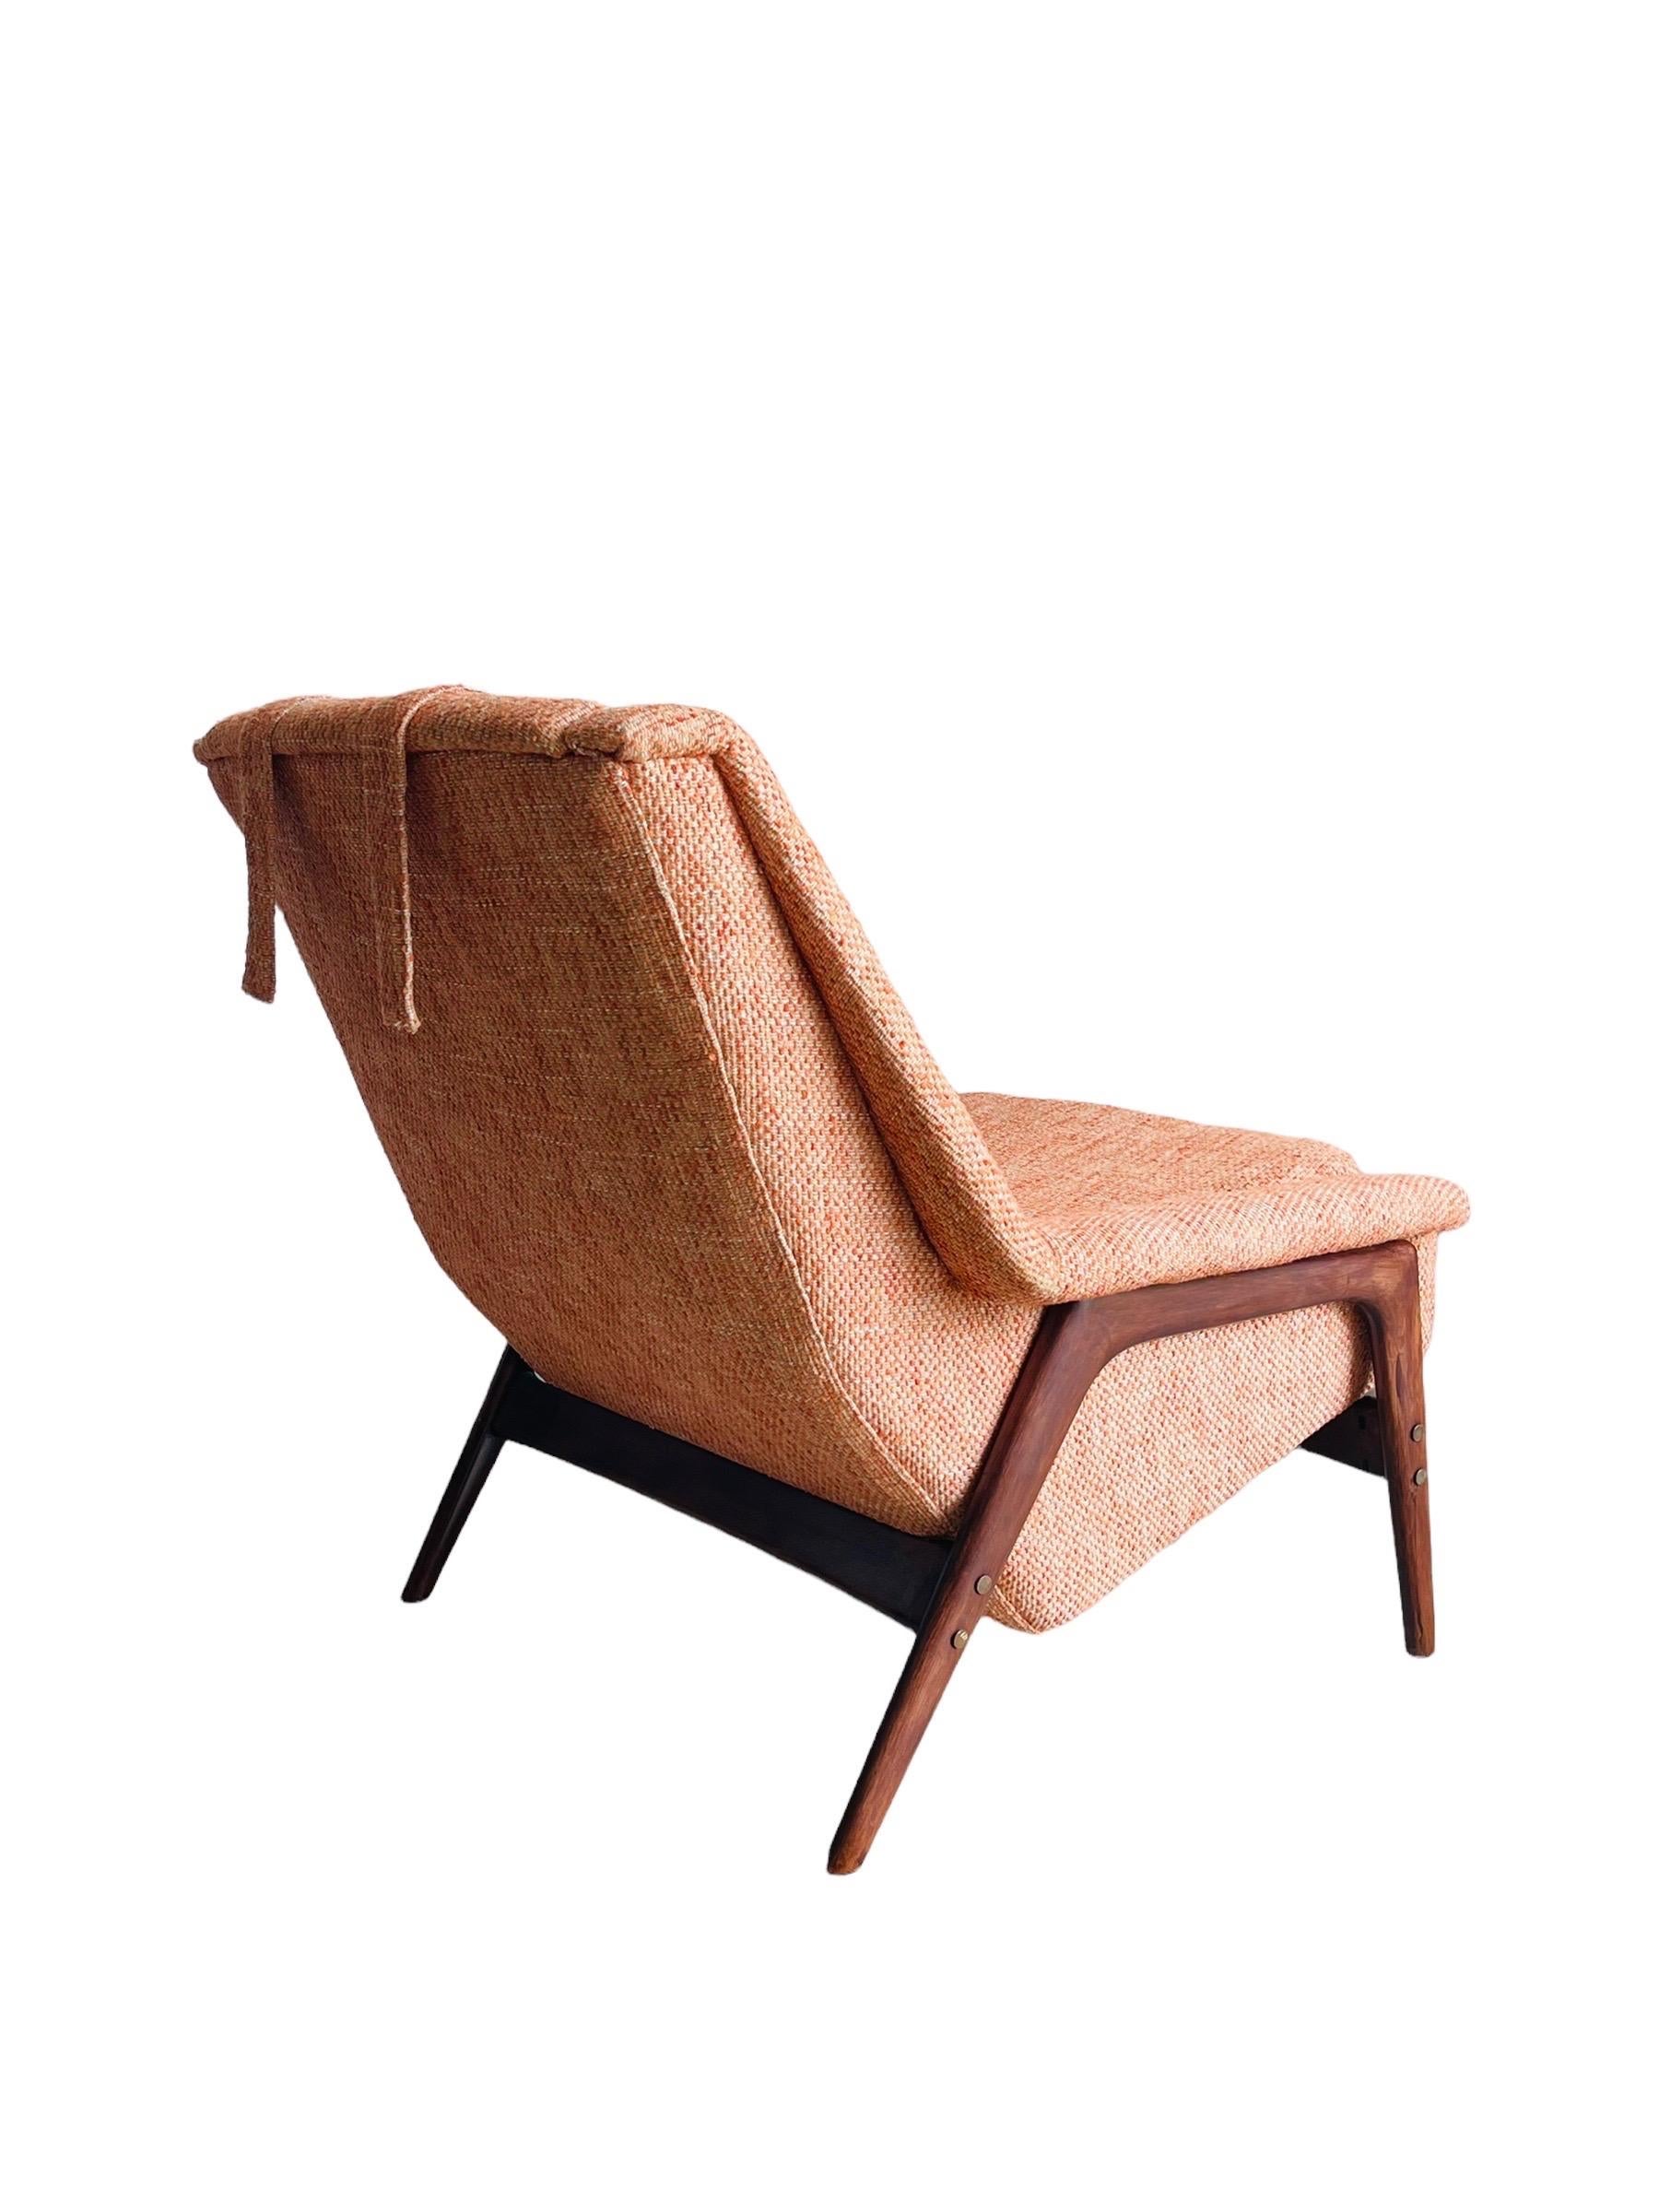 Folke Ohlsson Walnut Lounge Chair & Ottoman for DUX 3